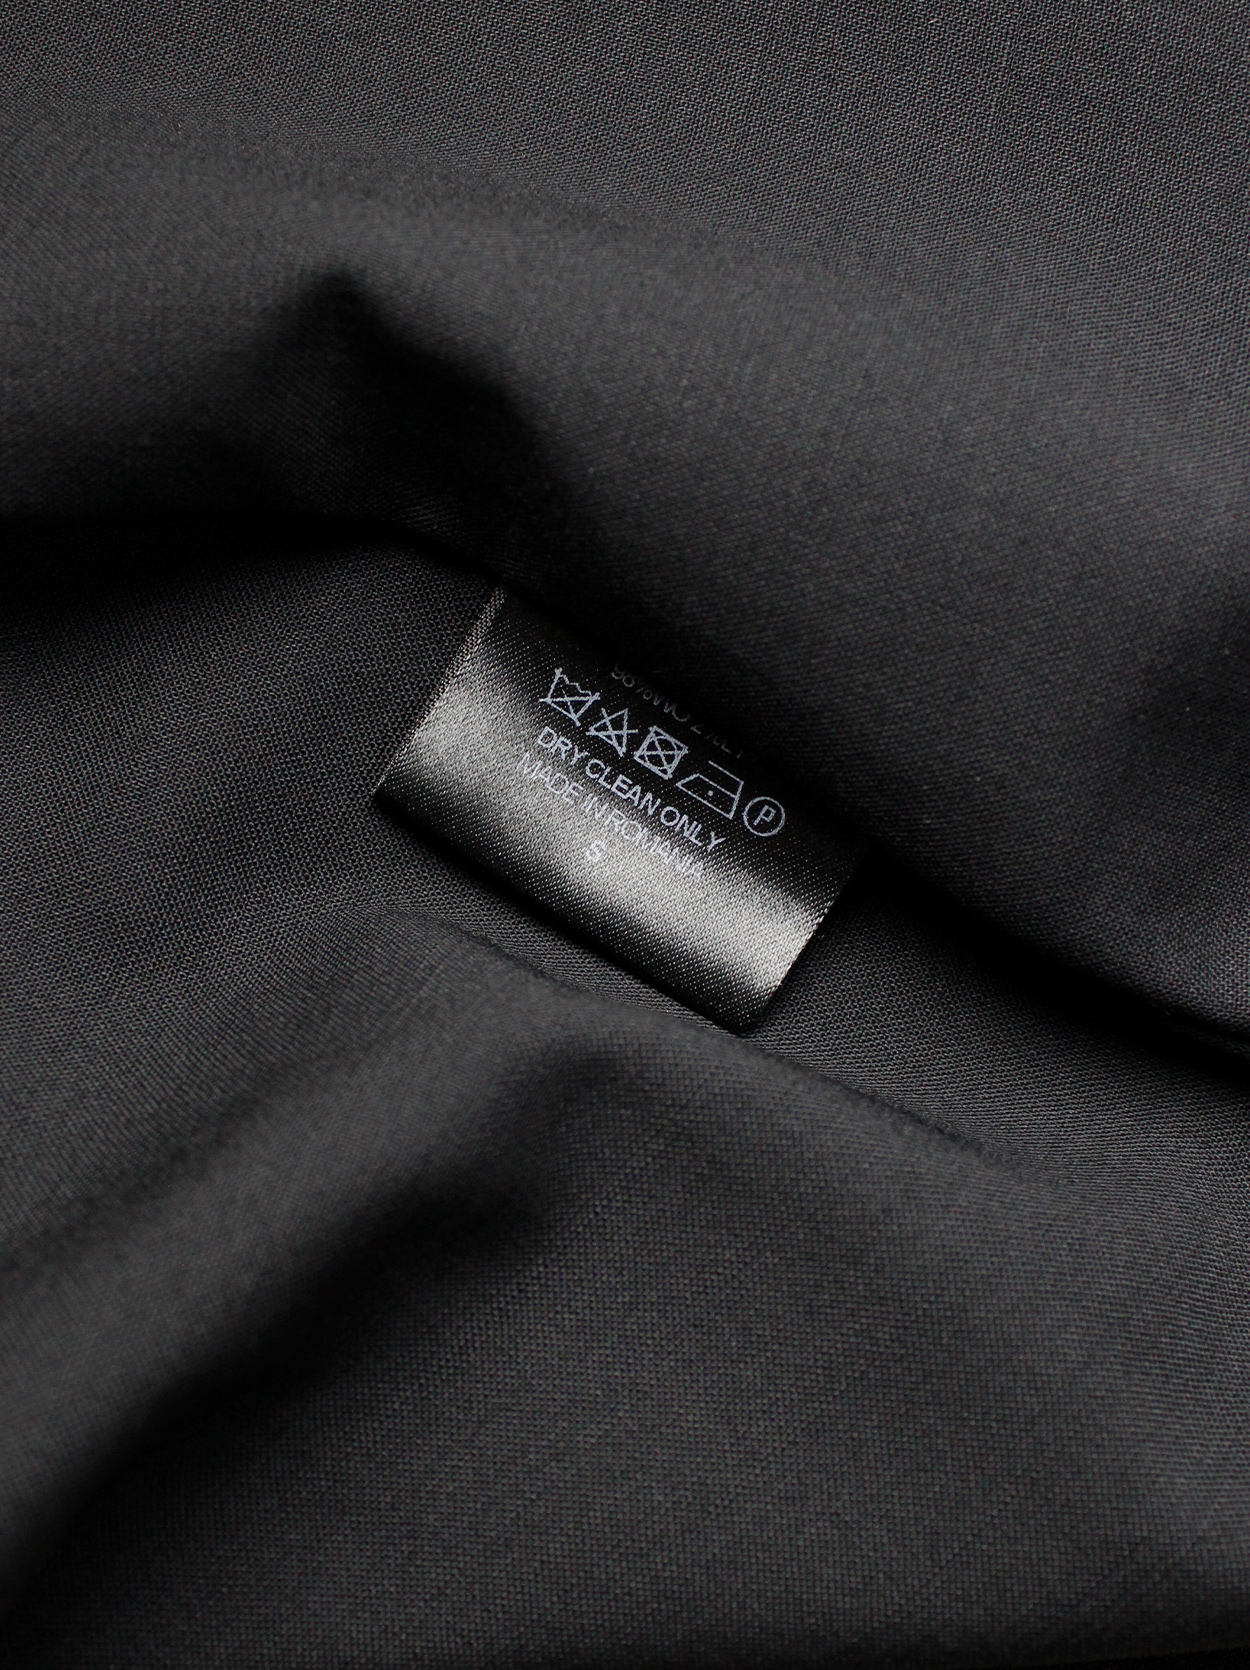 A.F. Vandevorst black asymmetric coat with draped cowl volume along the ...